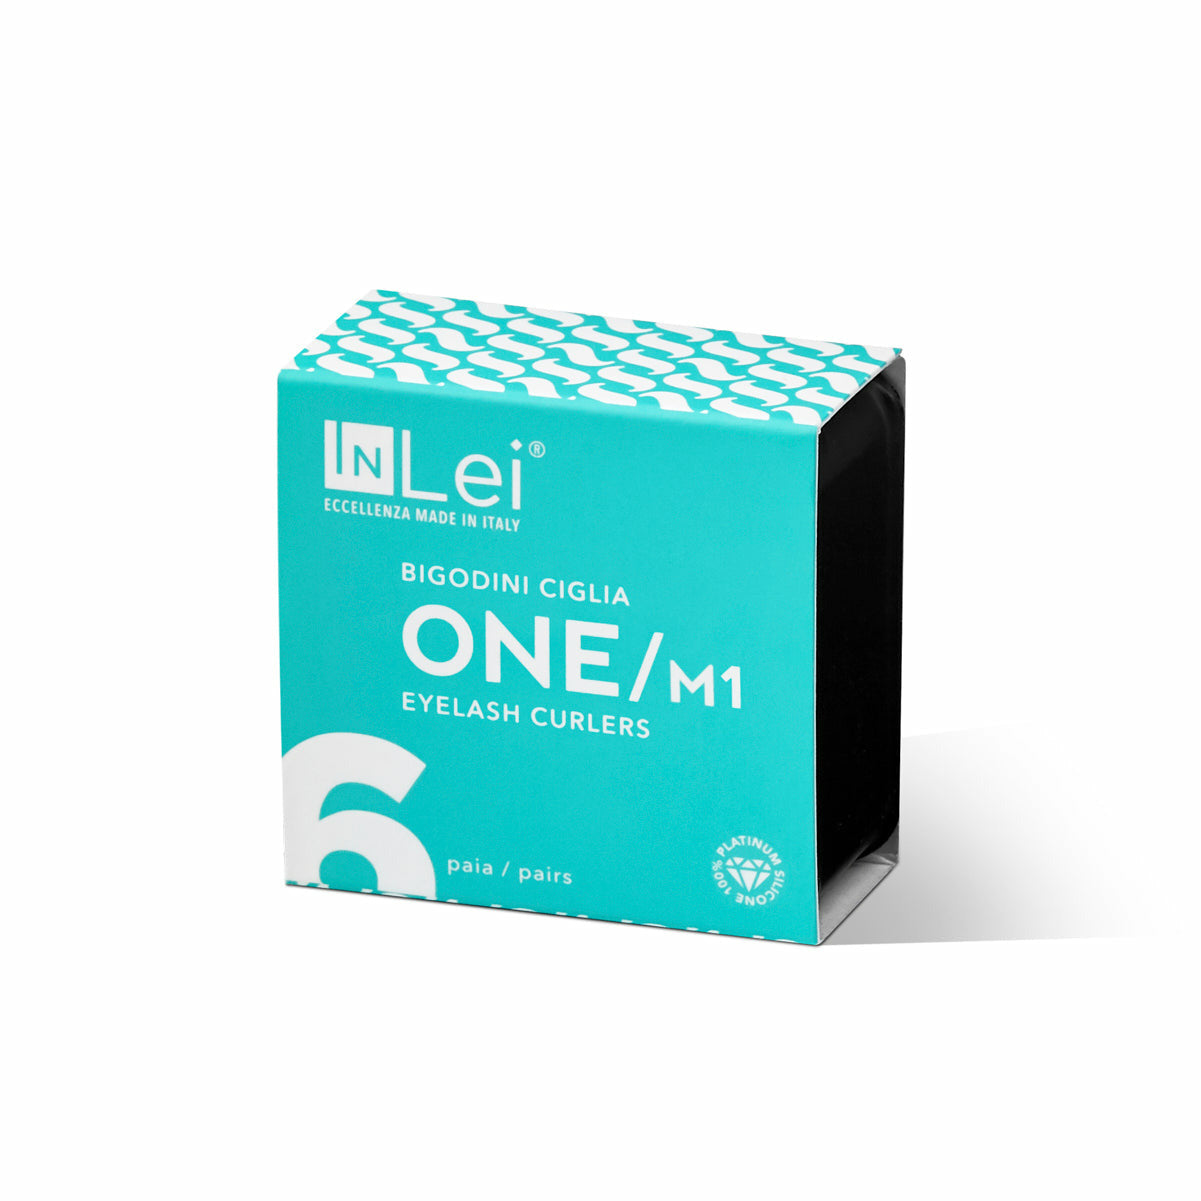 InLei® “ONE” - Silicone Shields M1